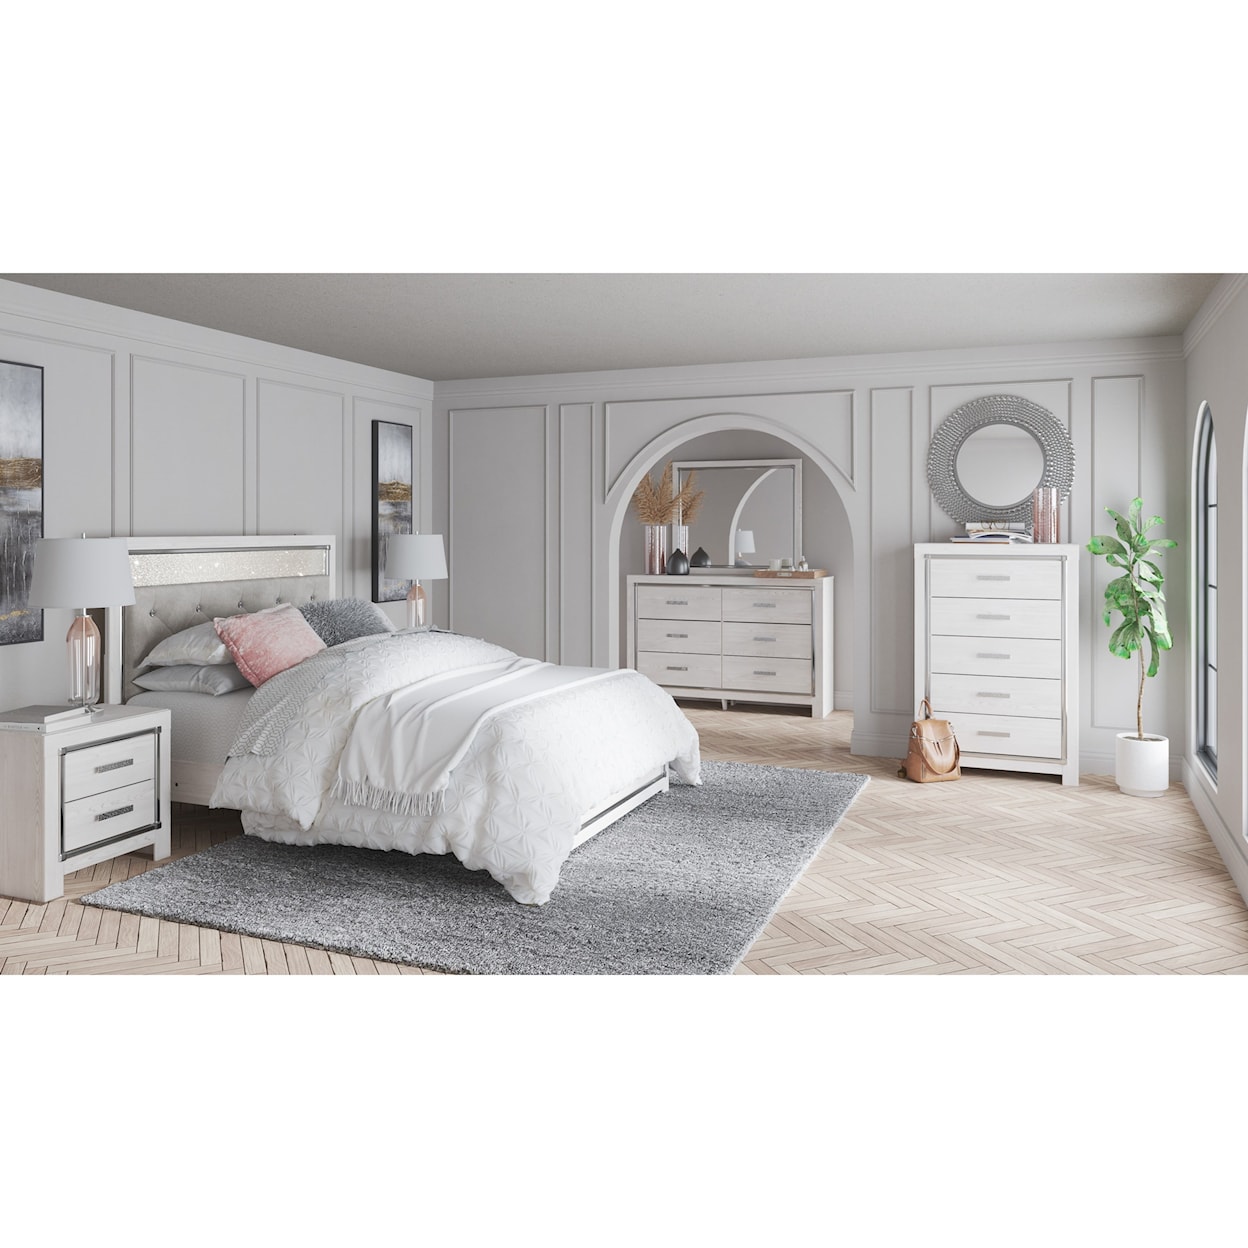 Ashley Furniture Signature Design Altyra Full Bedroom Group